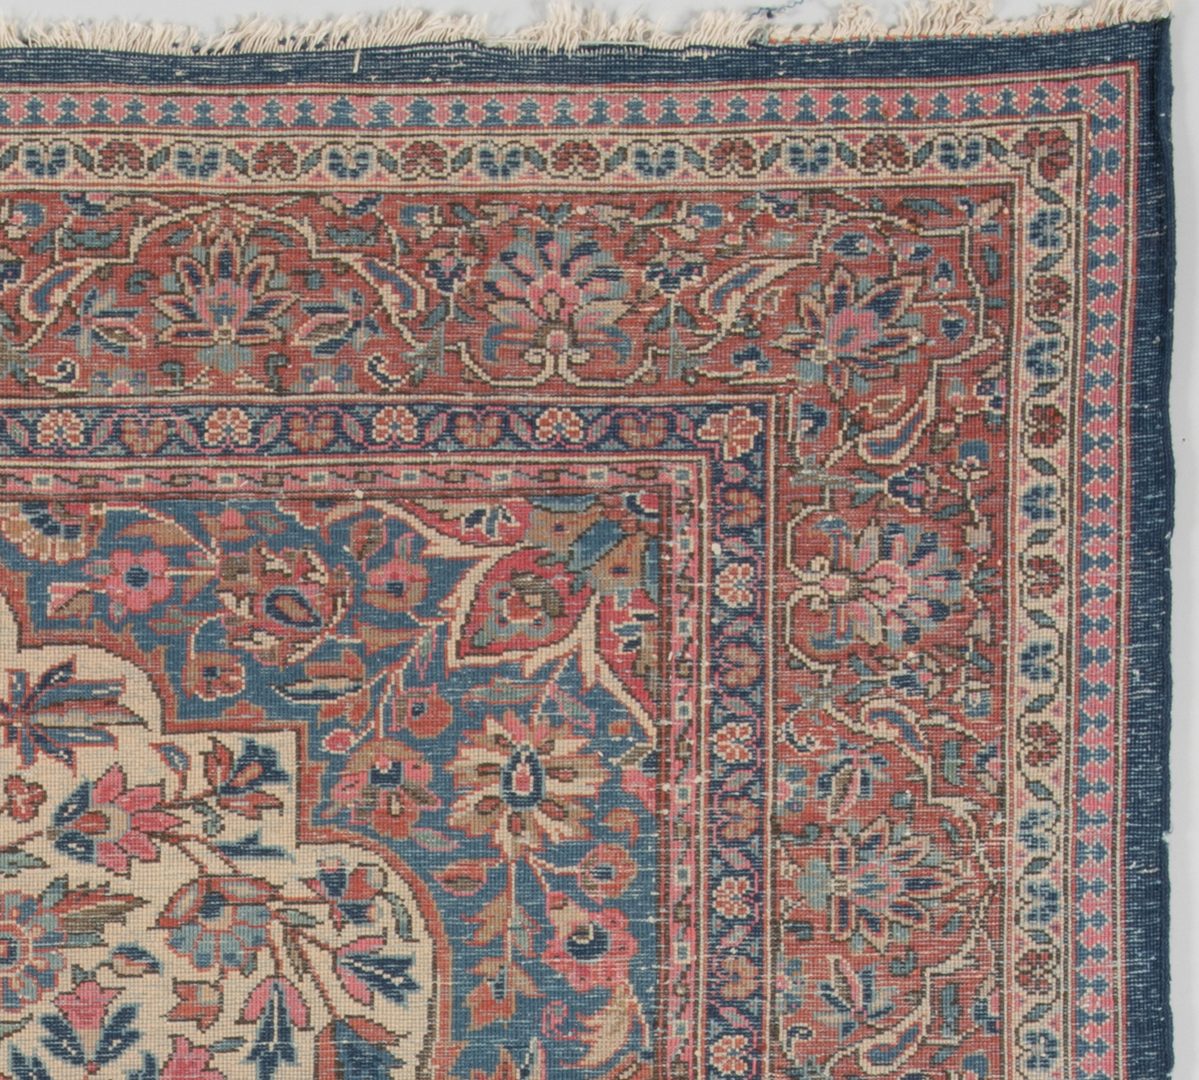 Lot 301: 2 Antique Persian Area Rugs